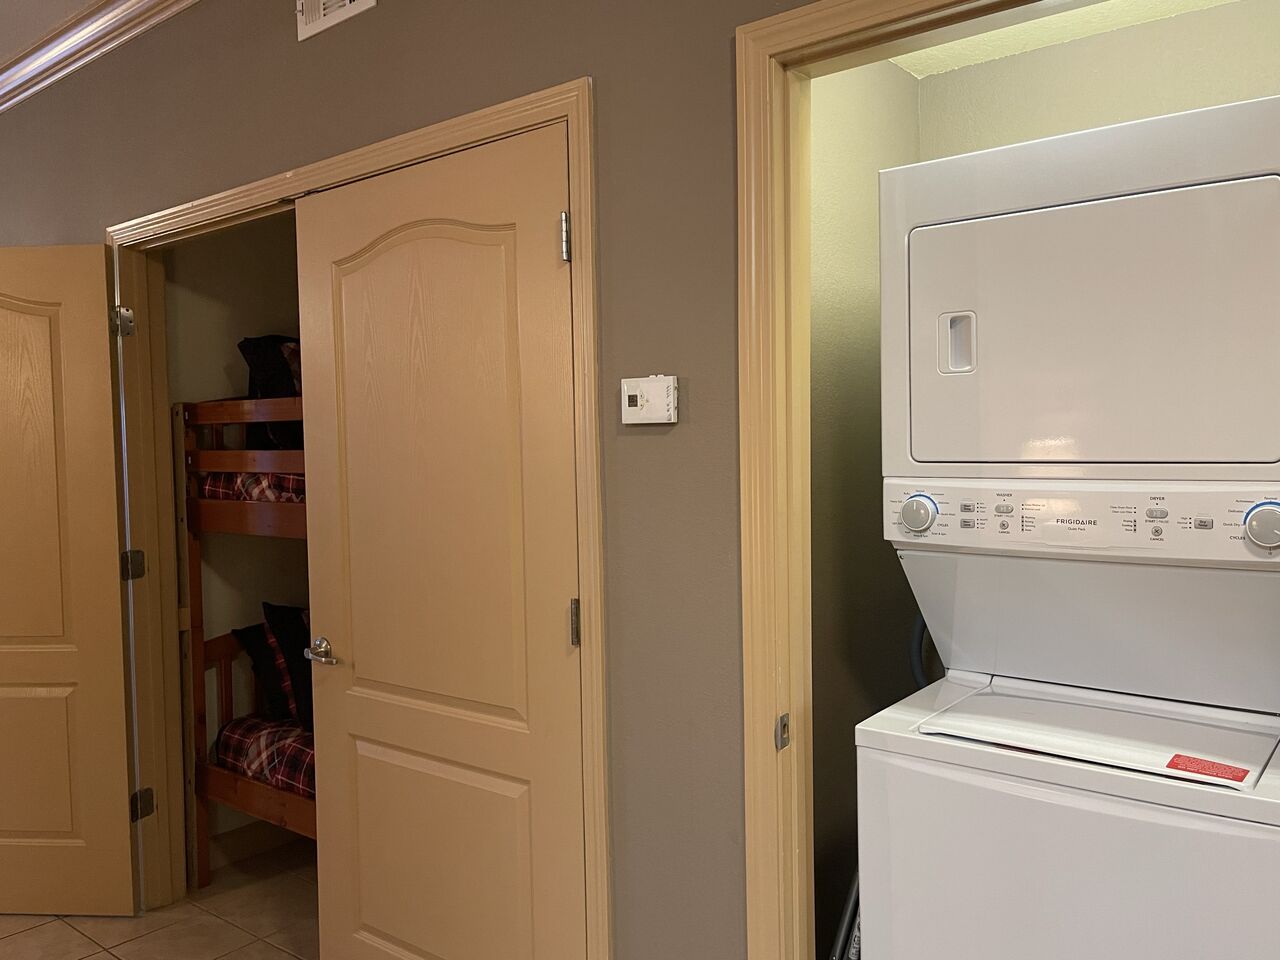 Laundry closet/Bunkbed closet